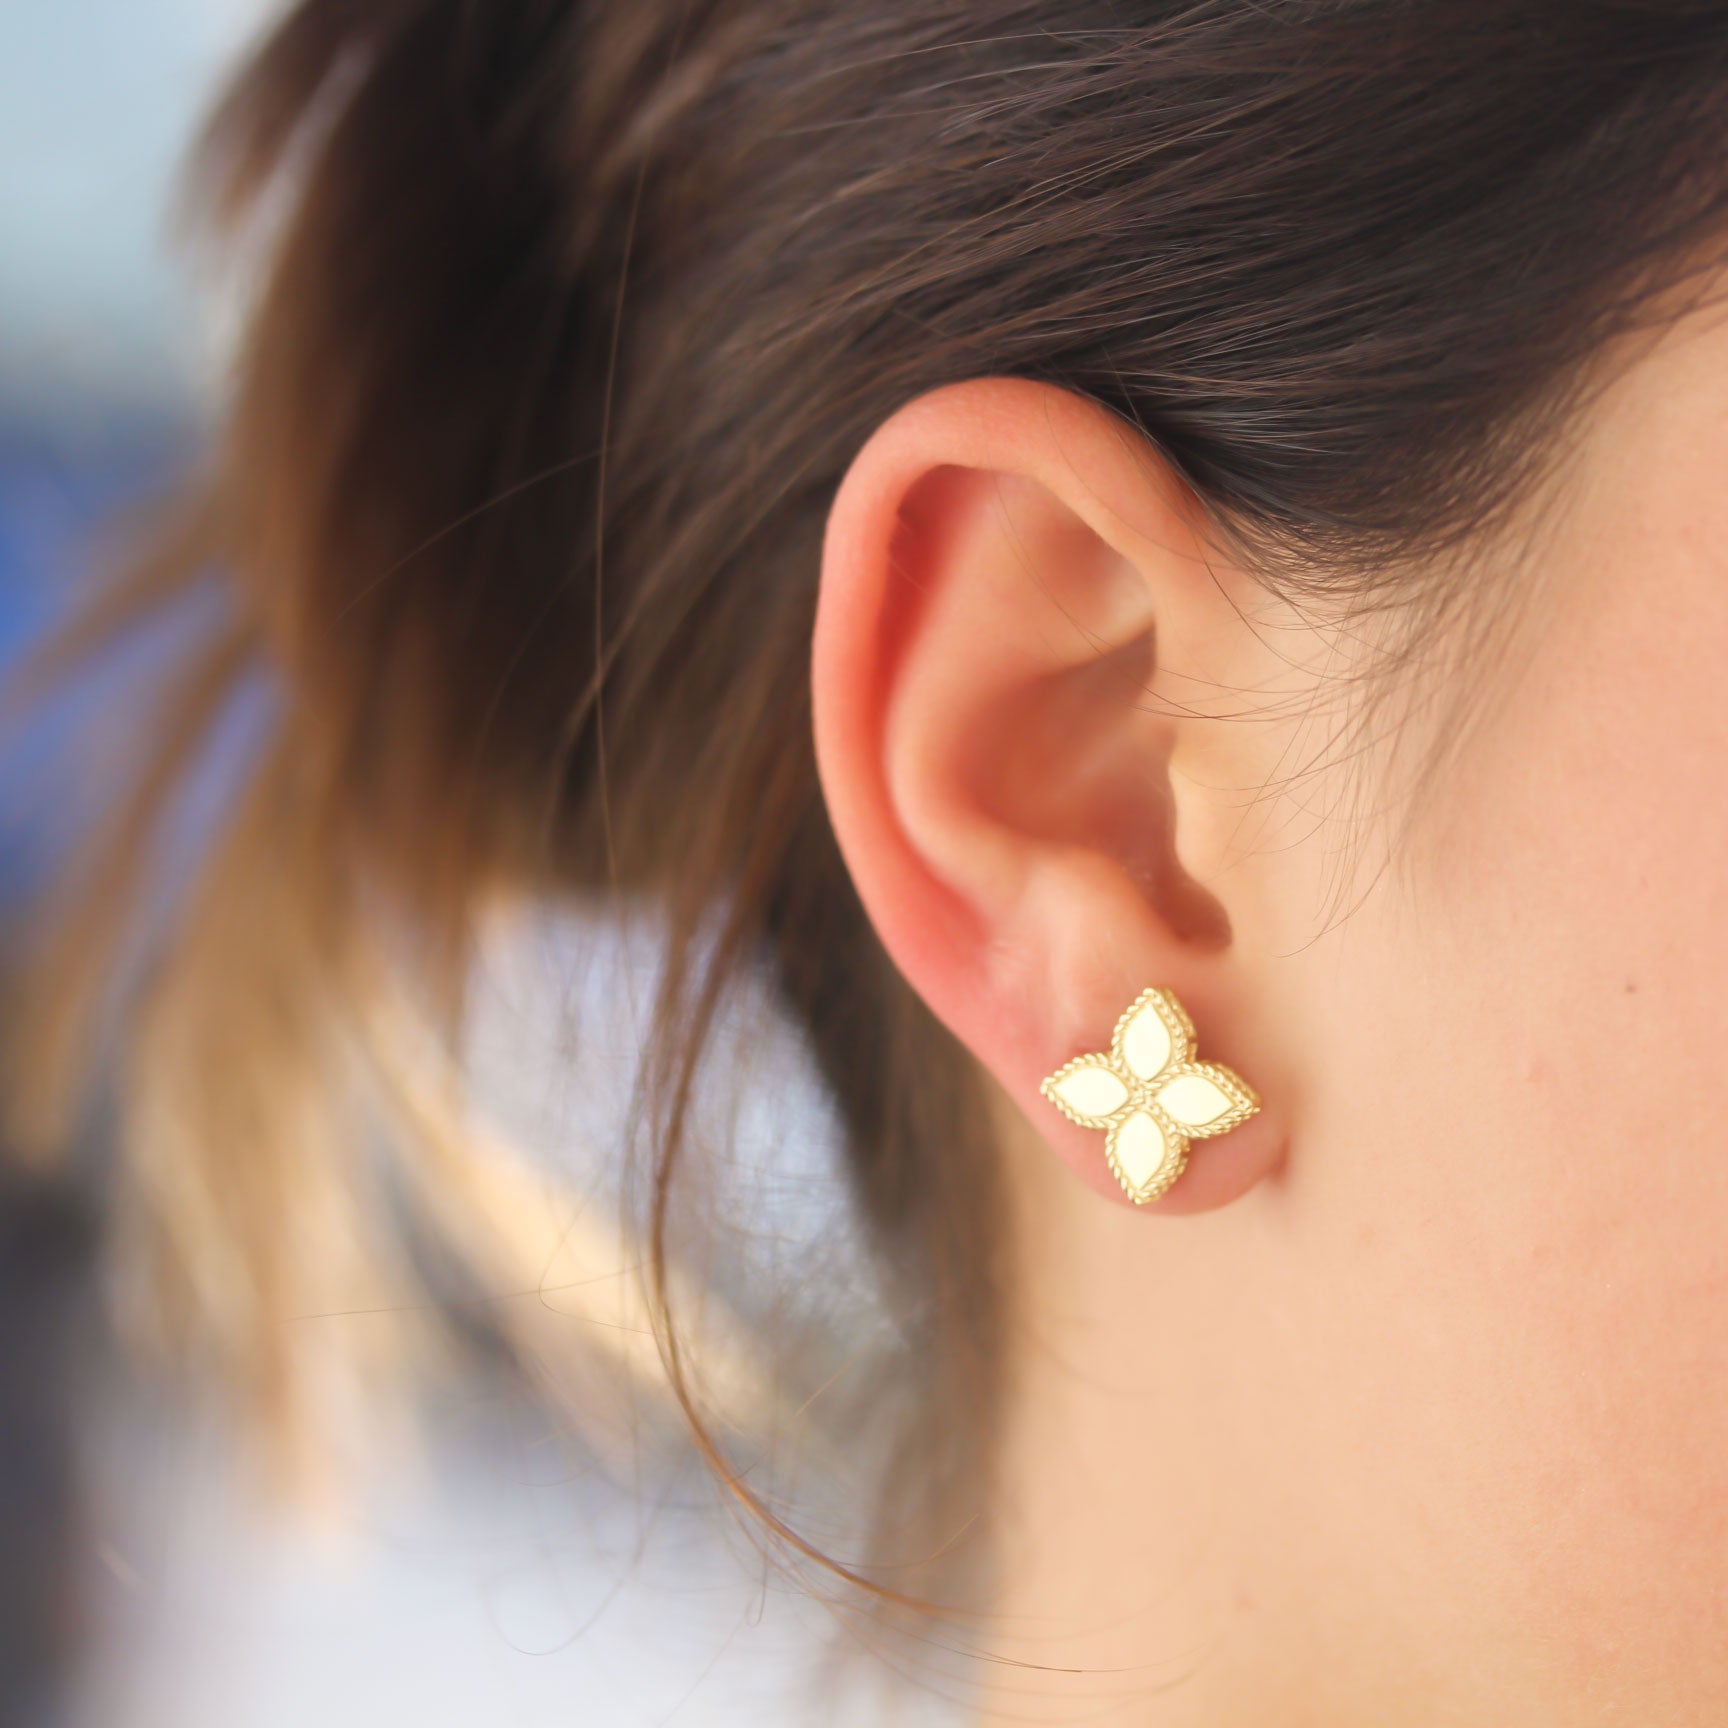 Princess flower medium stud earrings - Be On Park